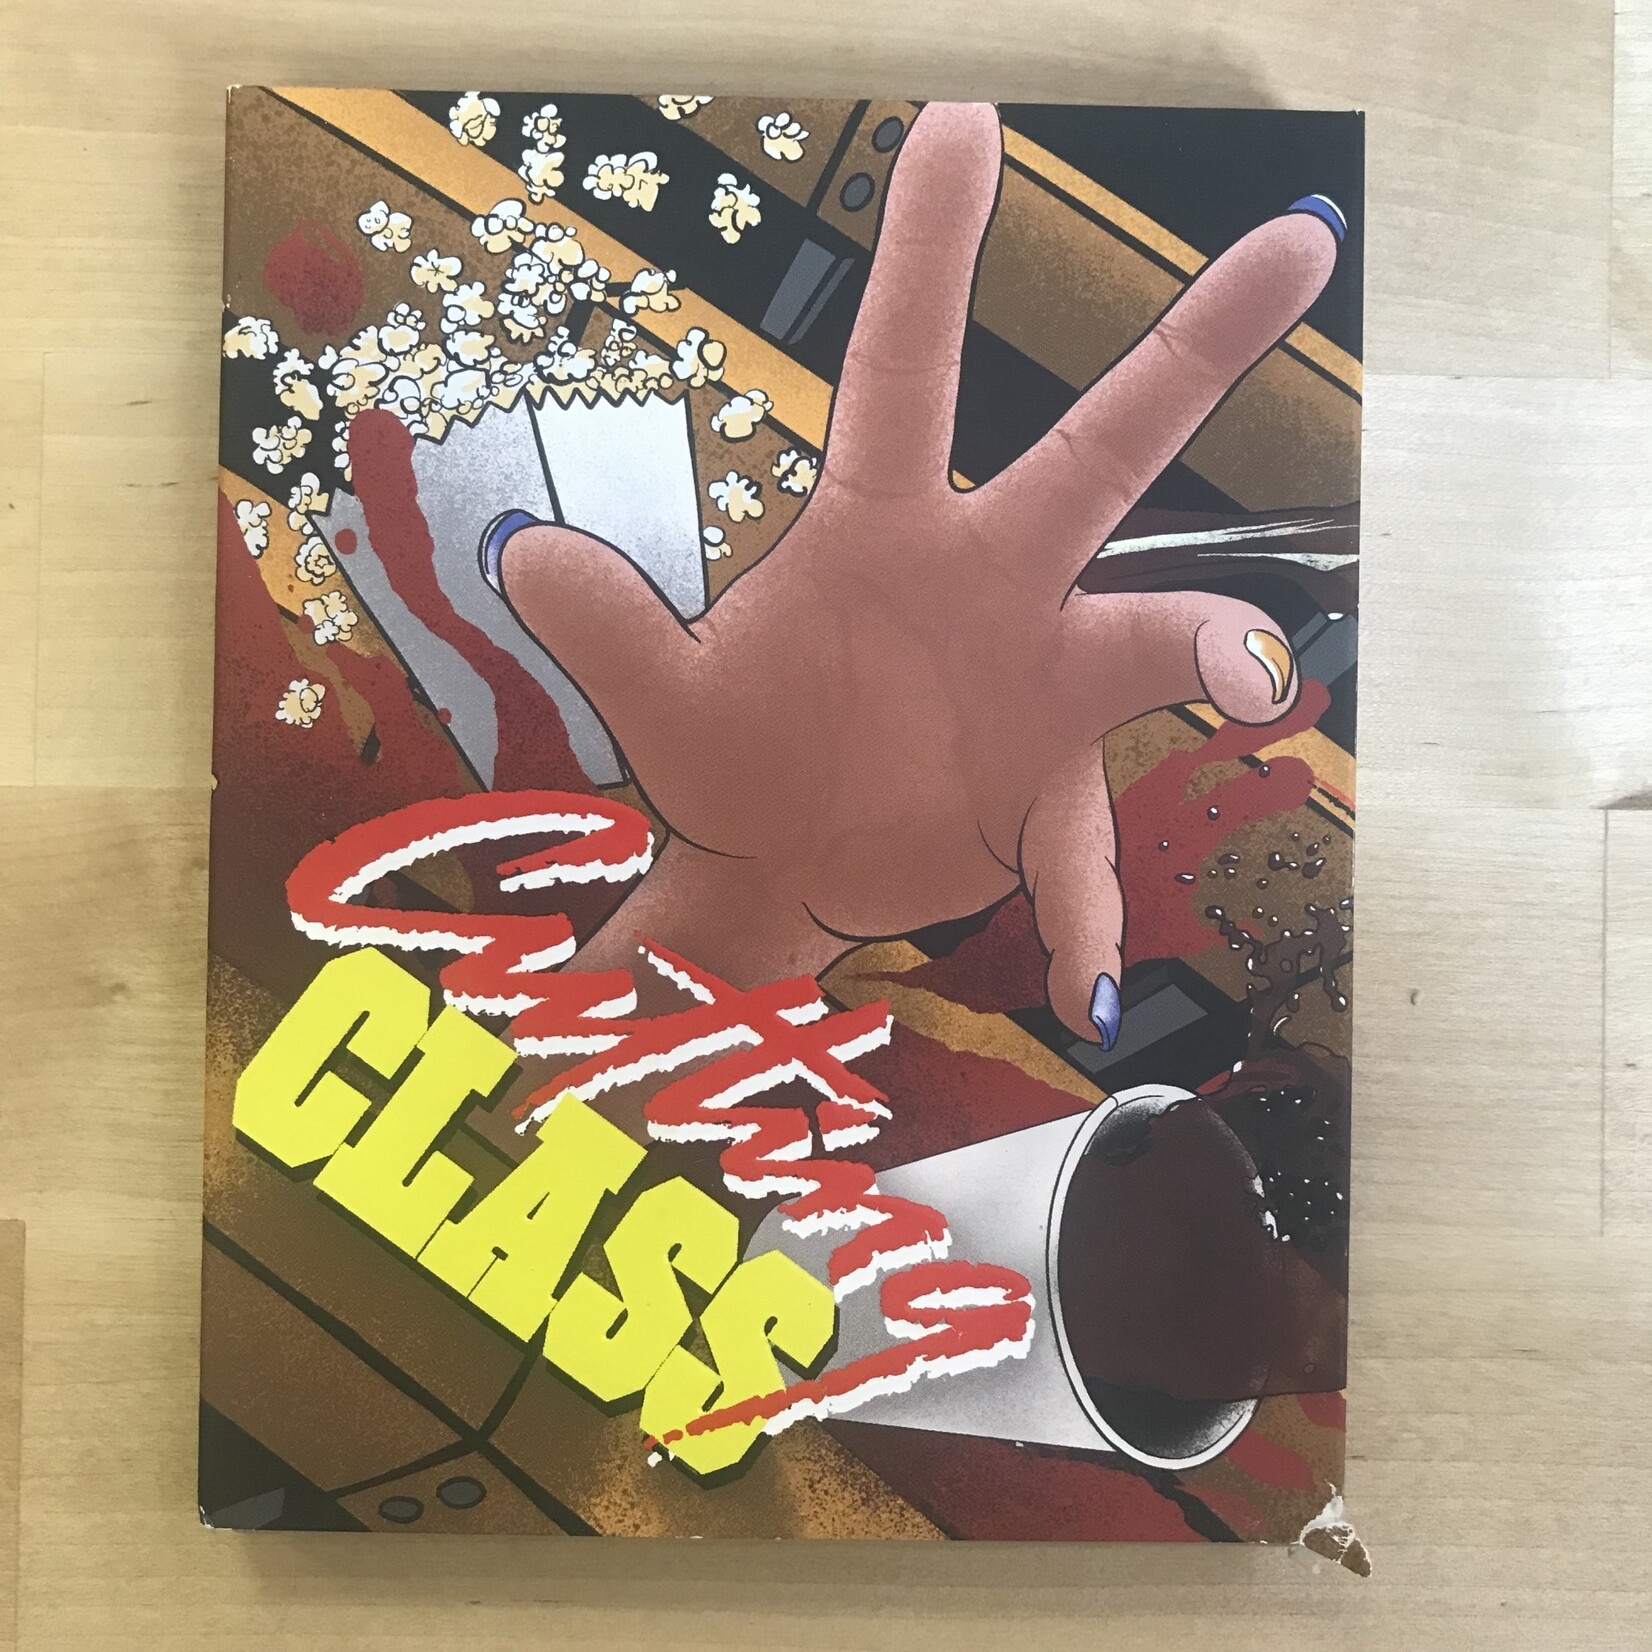 Cutting Class (Bleacher Slipcover) - DVD / Blu-Ray (USED)